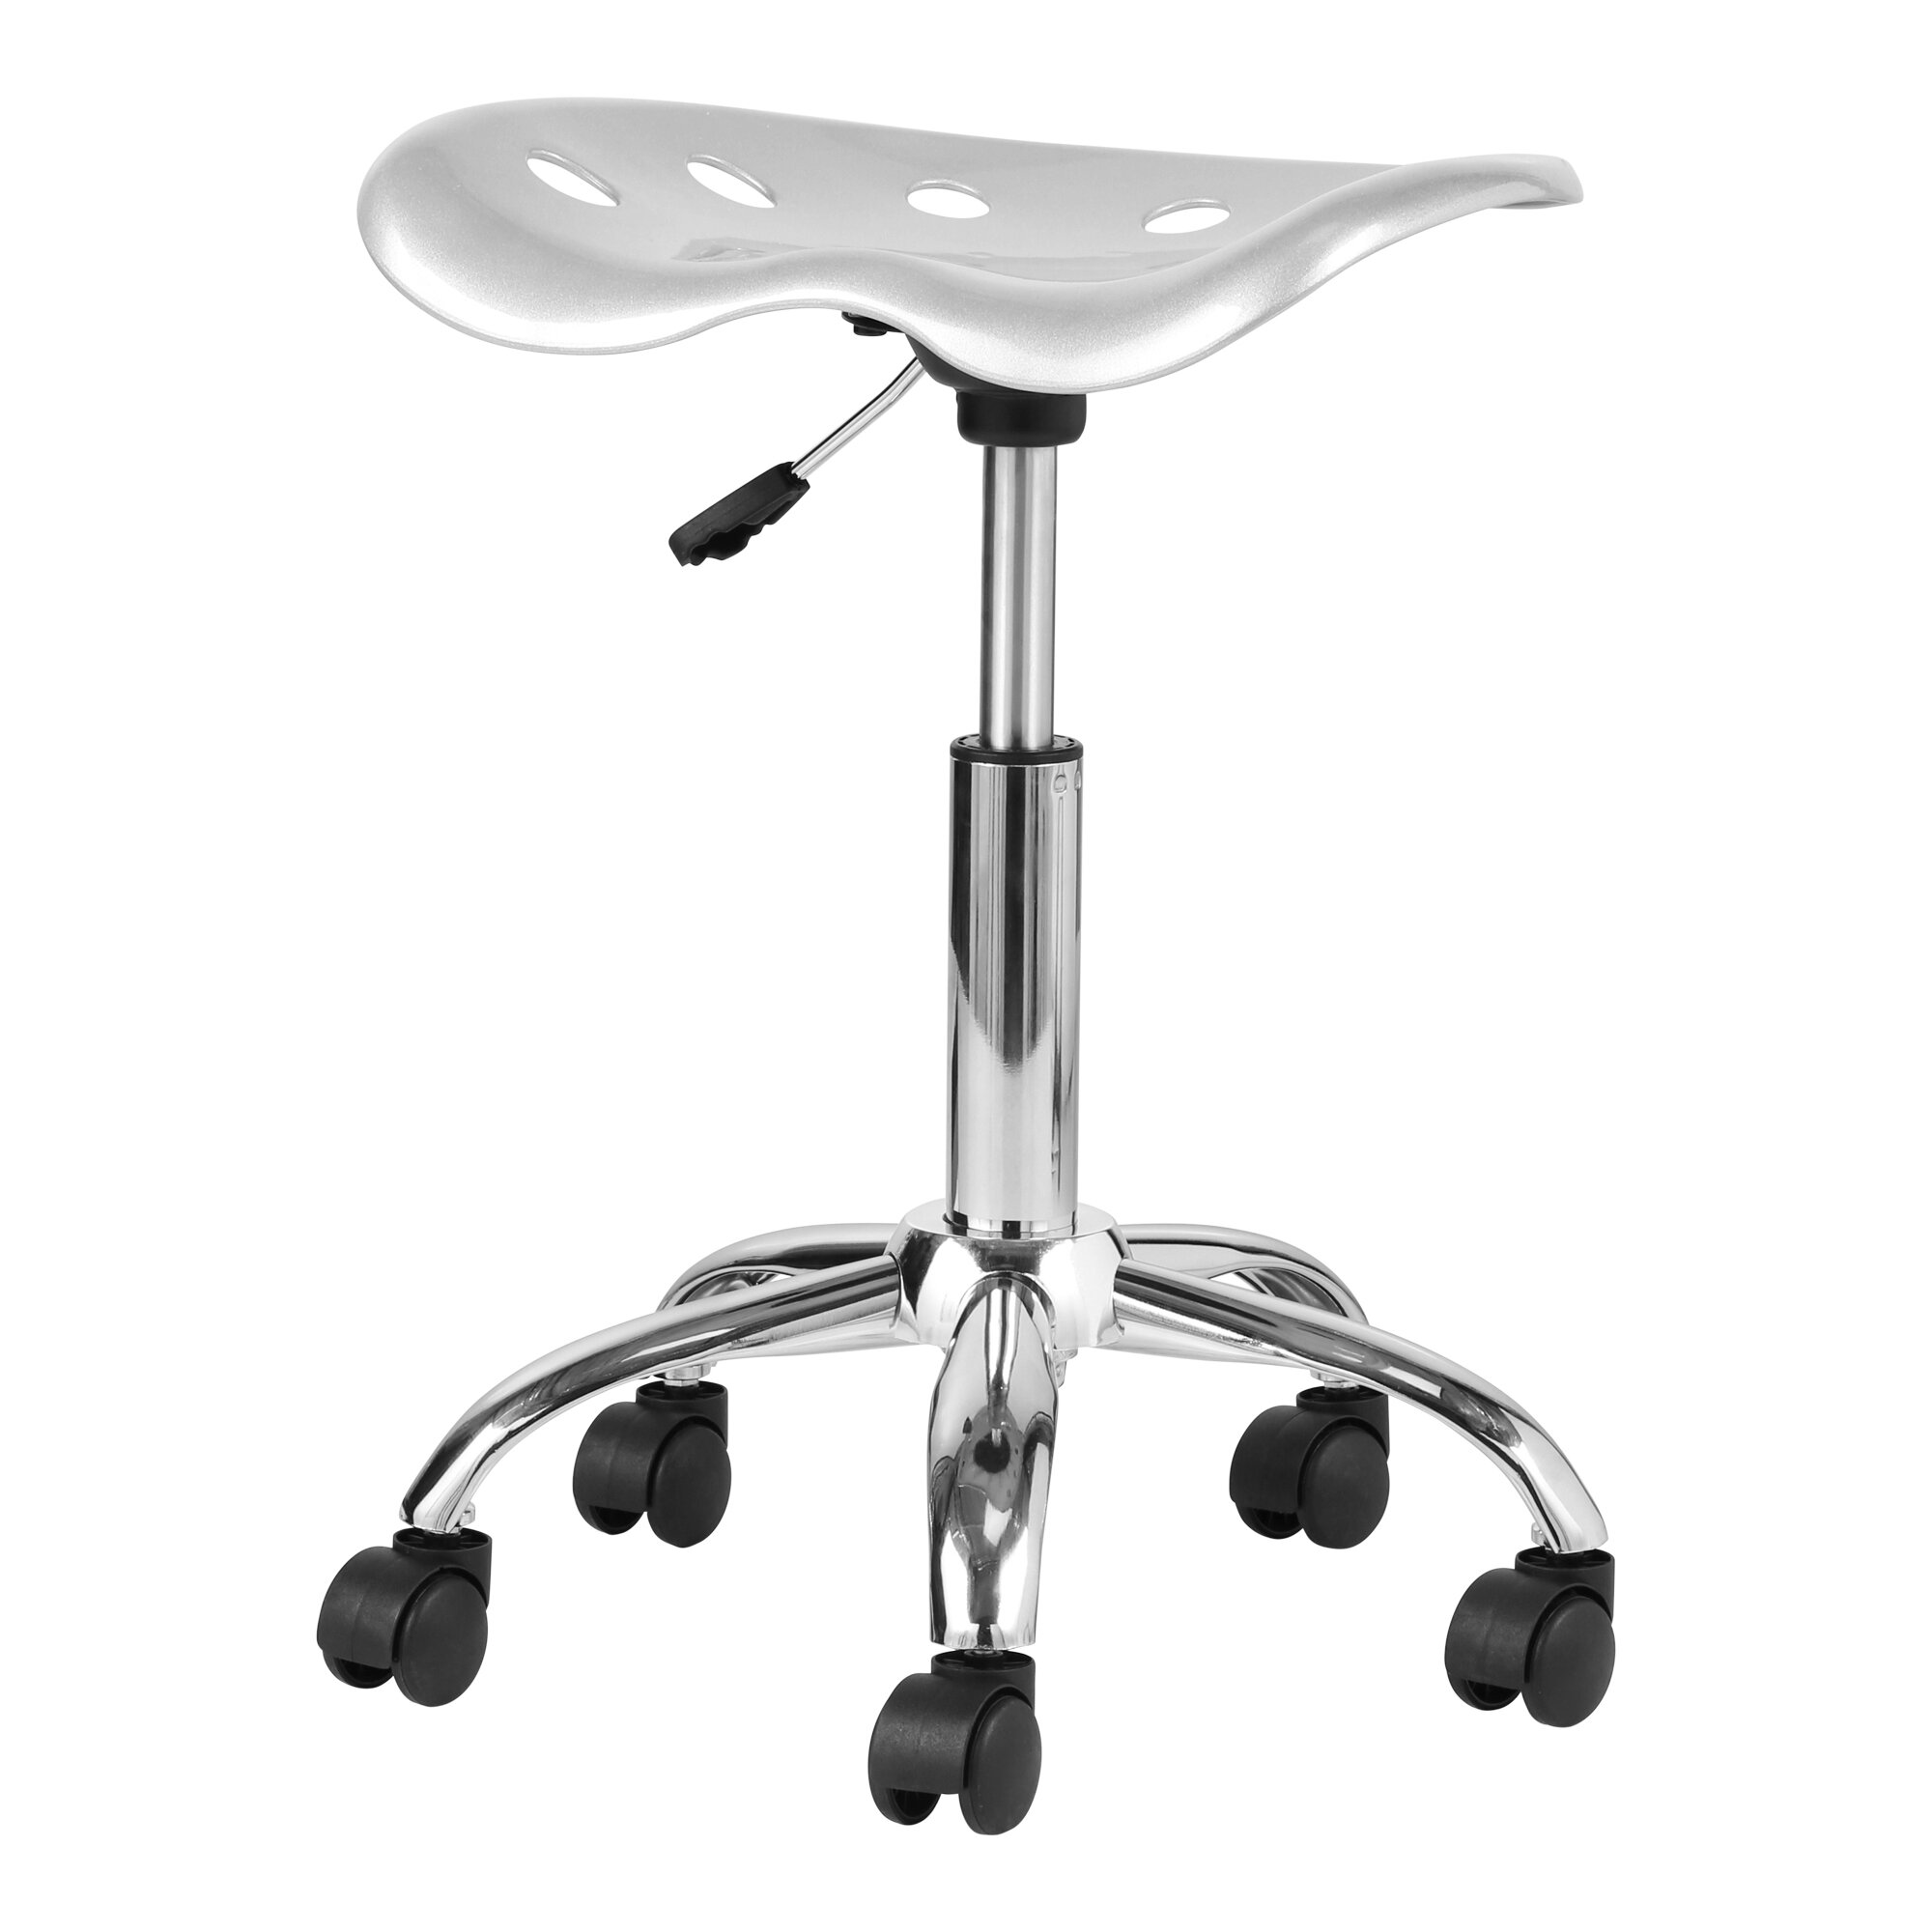 heightadjustable office stool